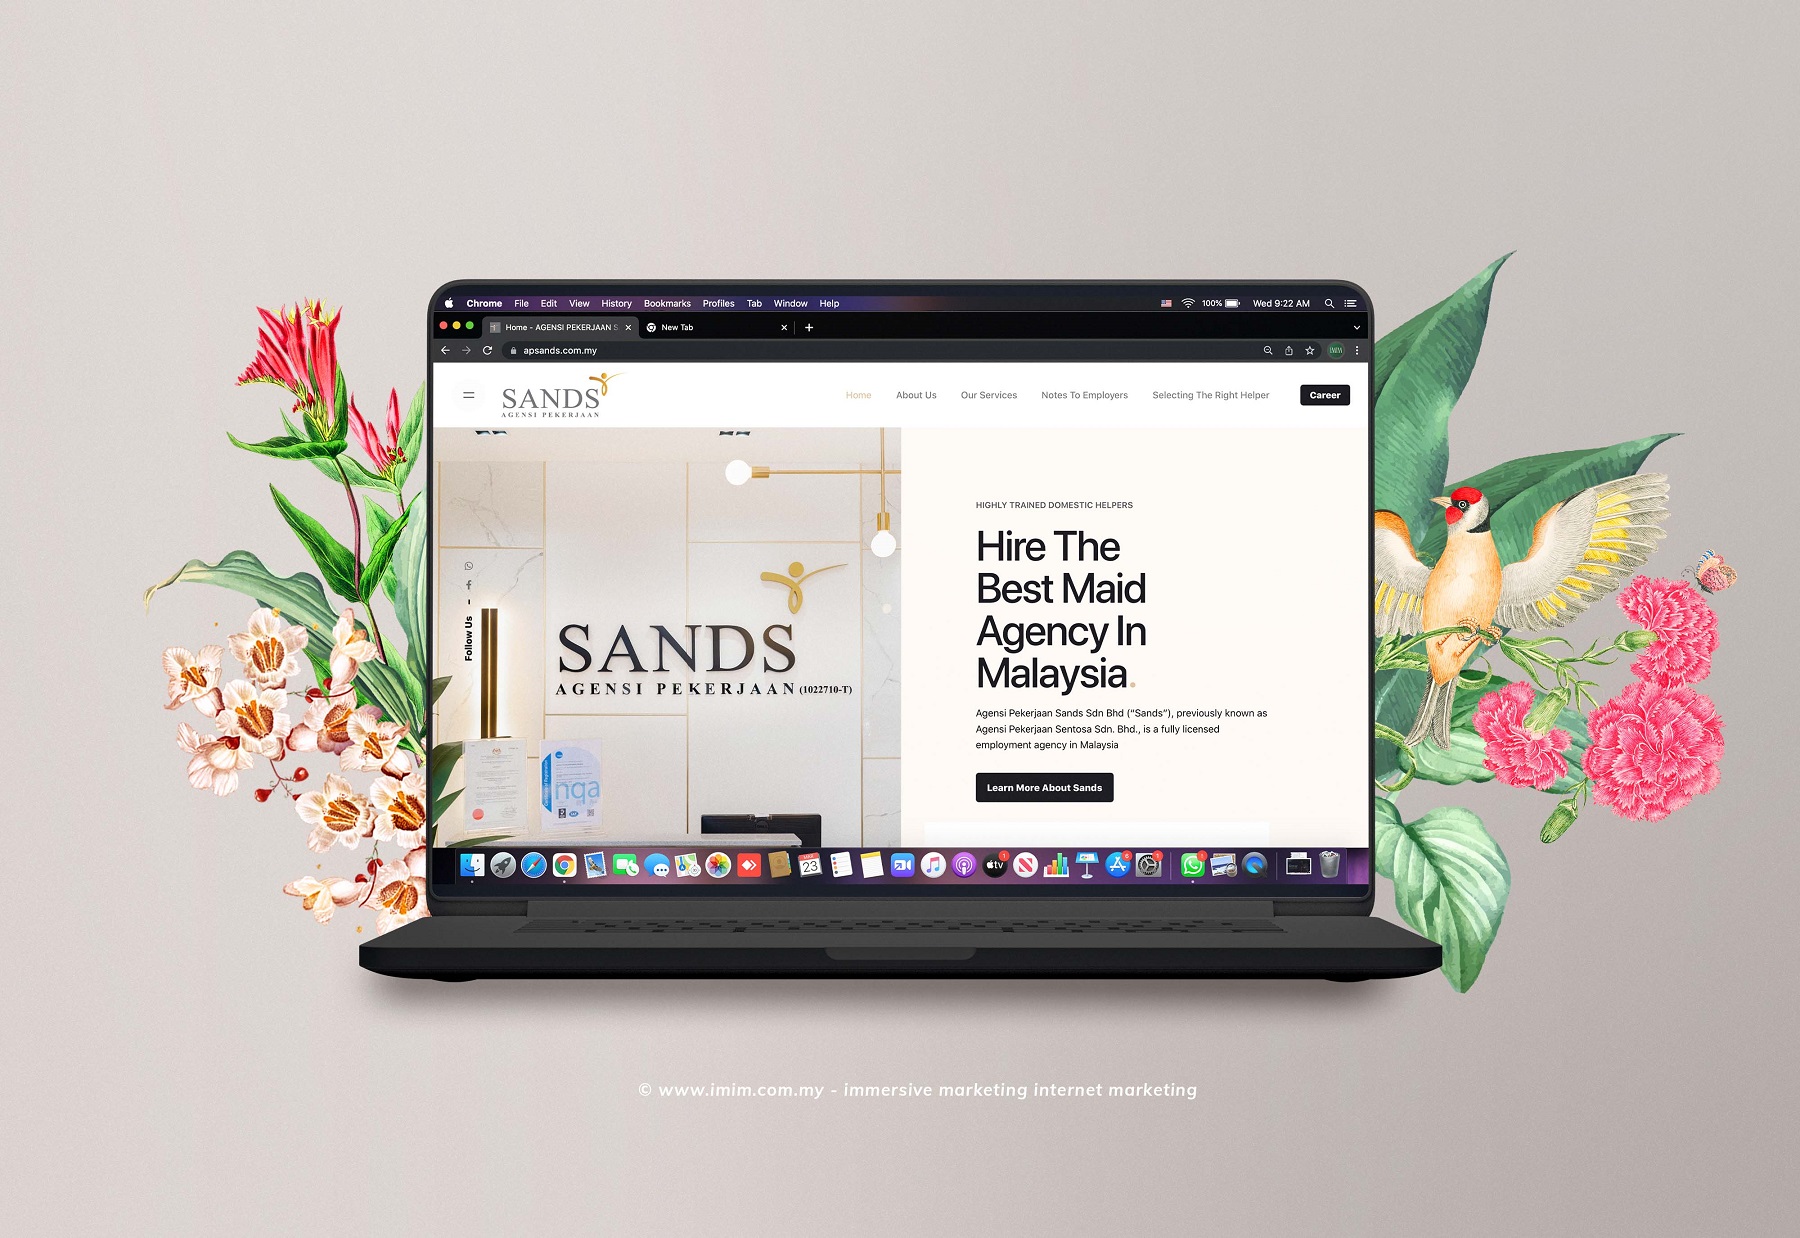 Agensi Pekerjaan Sands Web Design Portfolio a mockup screen from website designer in Pj Malaysia by IMIM